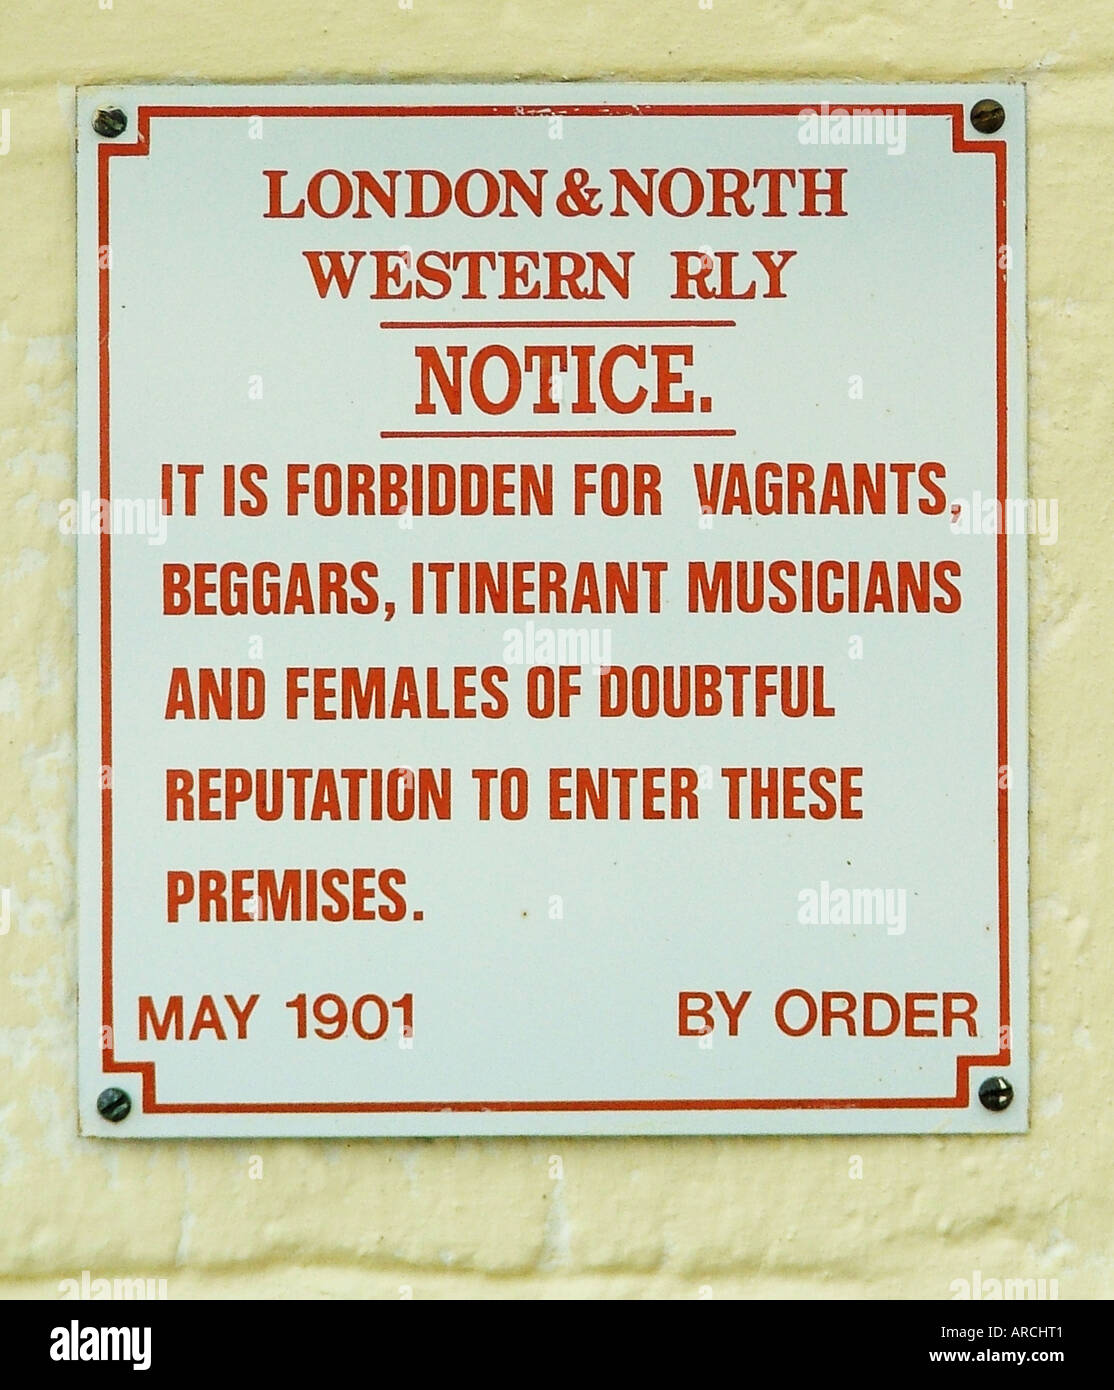 Railway notice, May 1901, London & North Western Railway Stock Photo